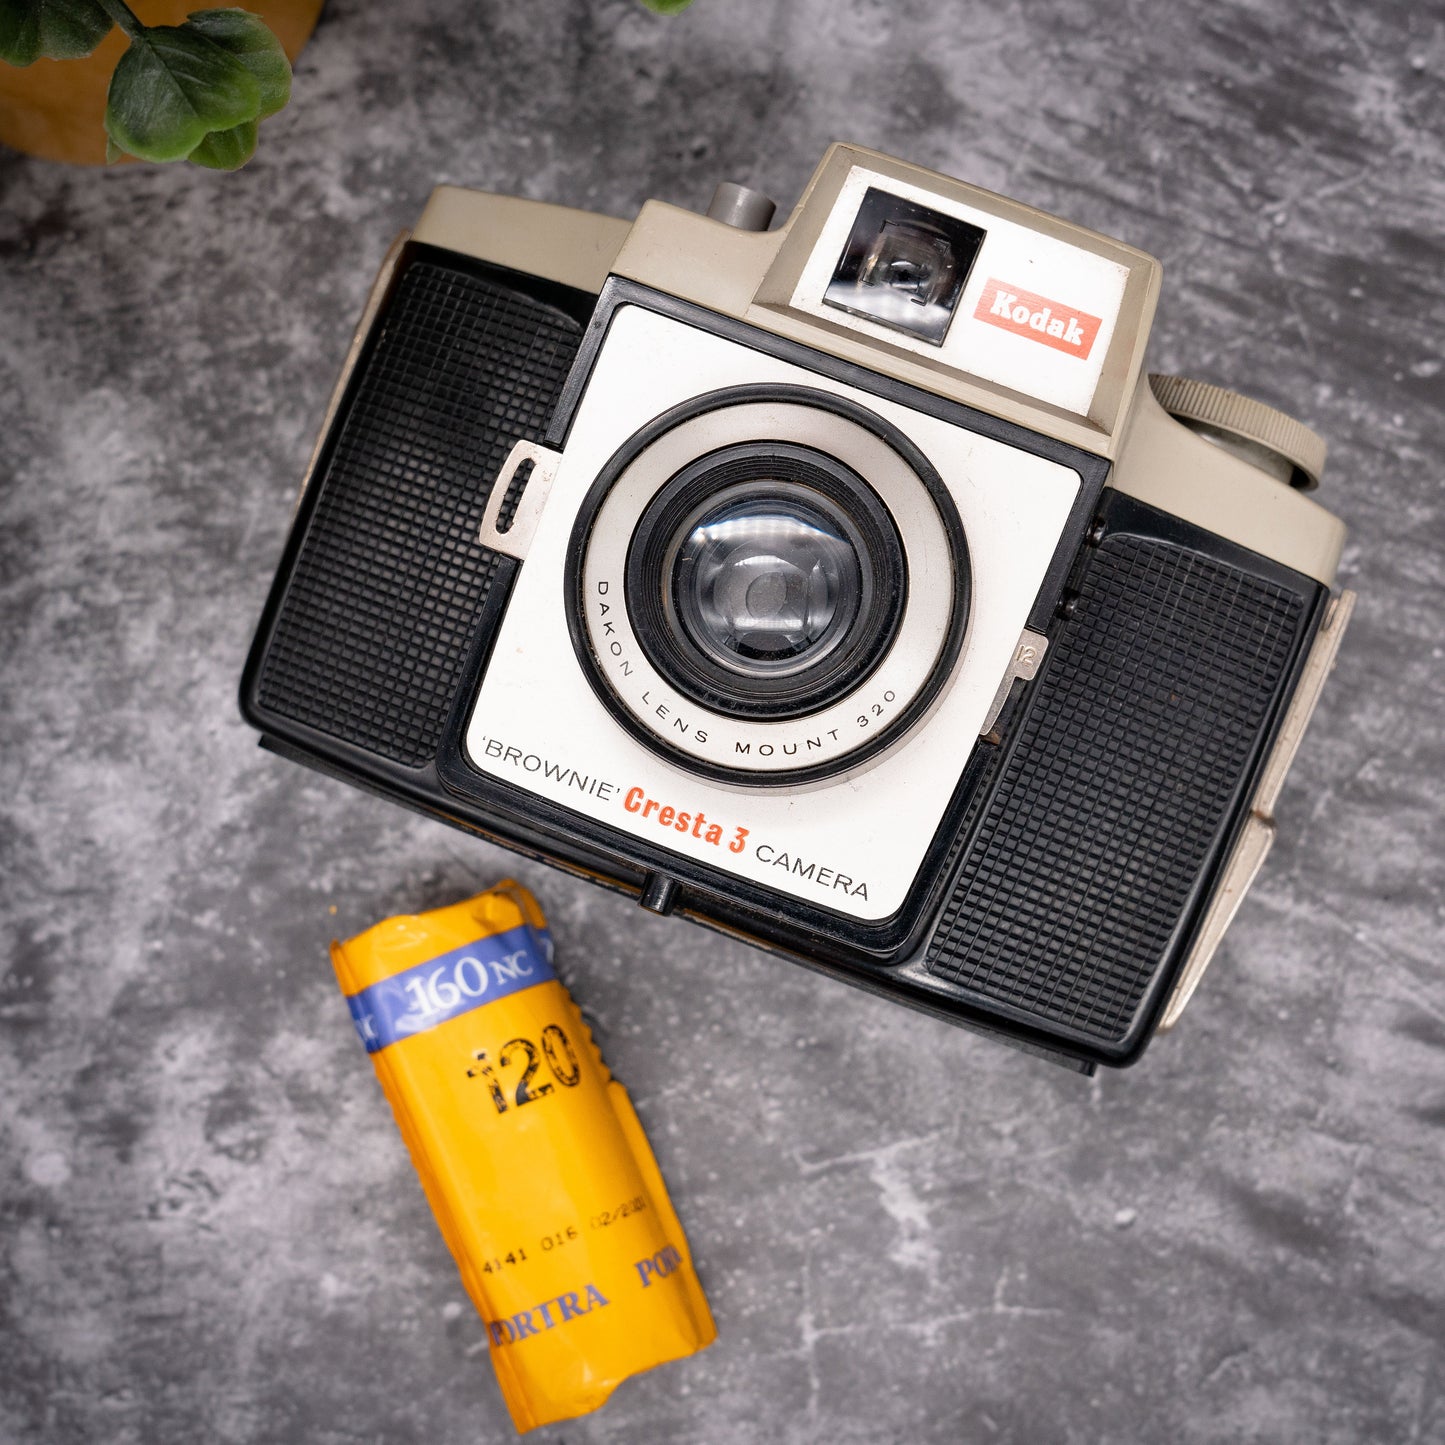 Vintage Film Camera Kit | Kodak Brownie Cresta 3 + Roll Of Expired Film